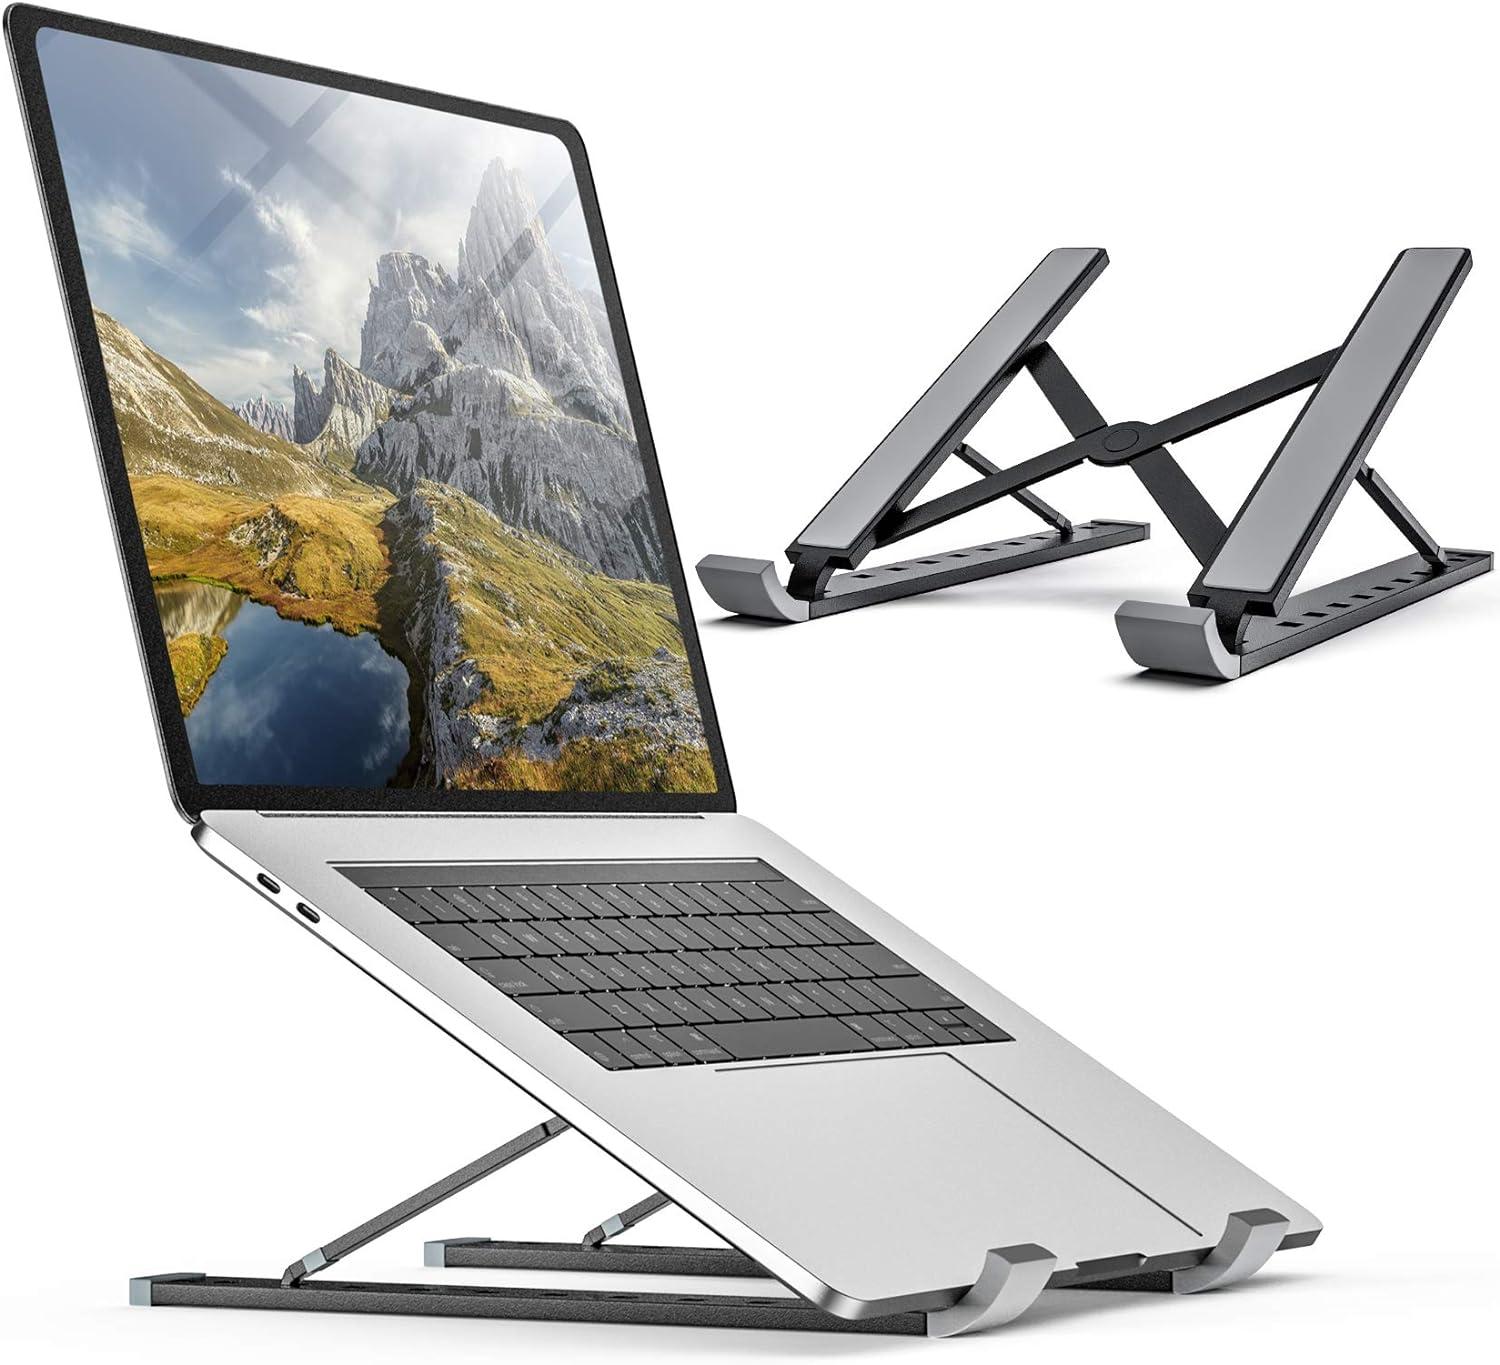 riorand portable laptop stand foldable adjustable laptop stand holder universal ergonomic aluminium alloy